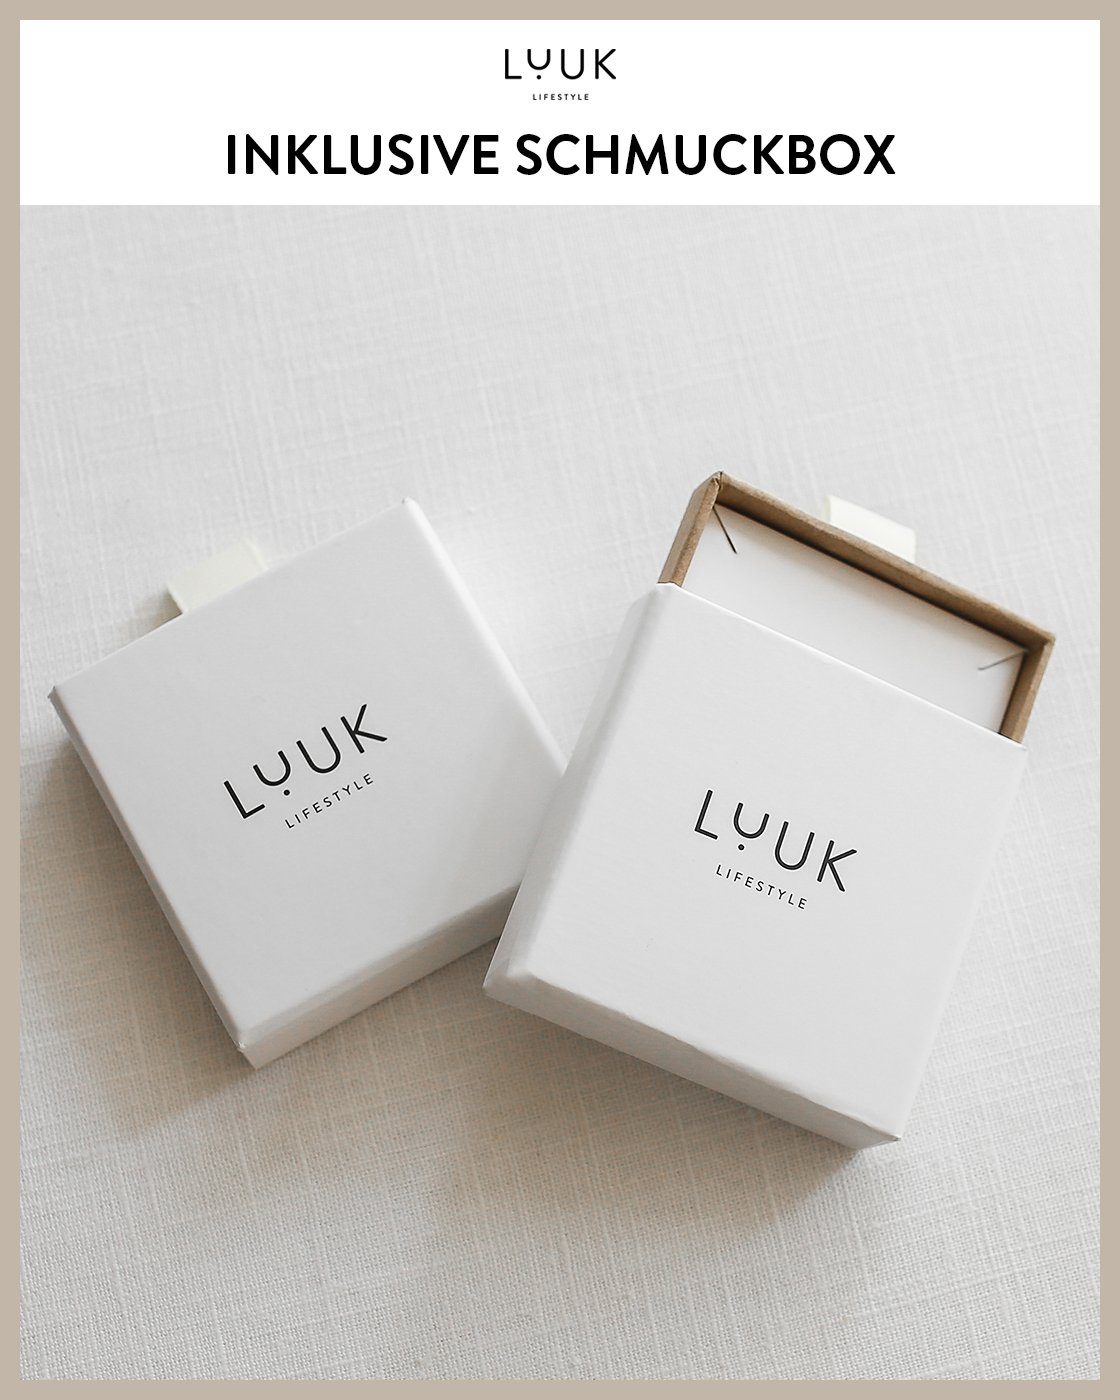 LUUK LIFESTYLE Schmuckset Kreis, inklusive Schmuckbox Gold toller